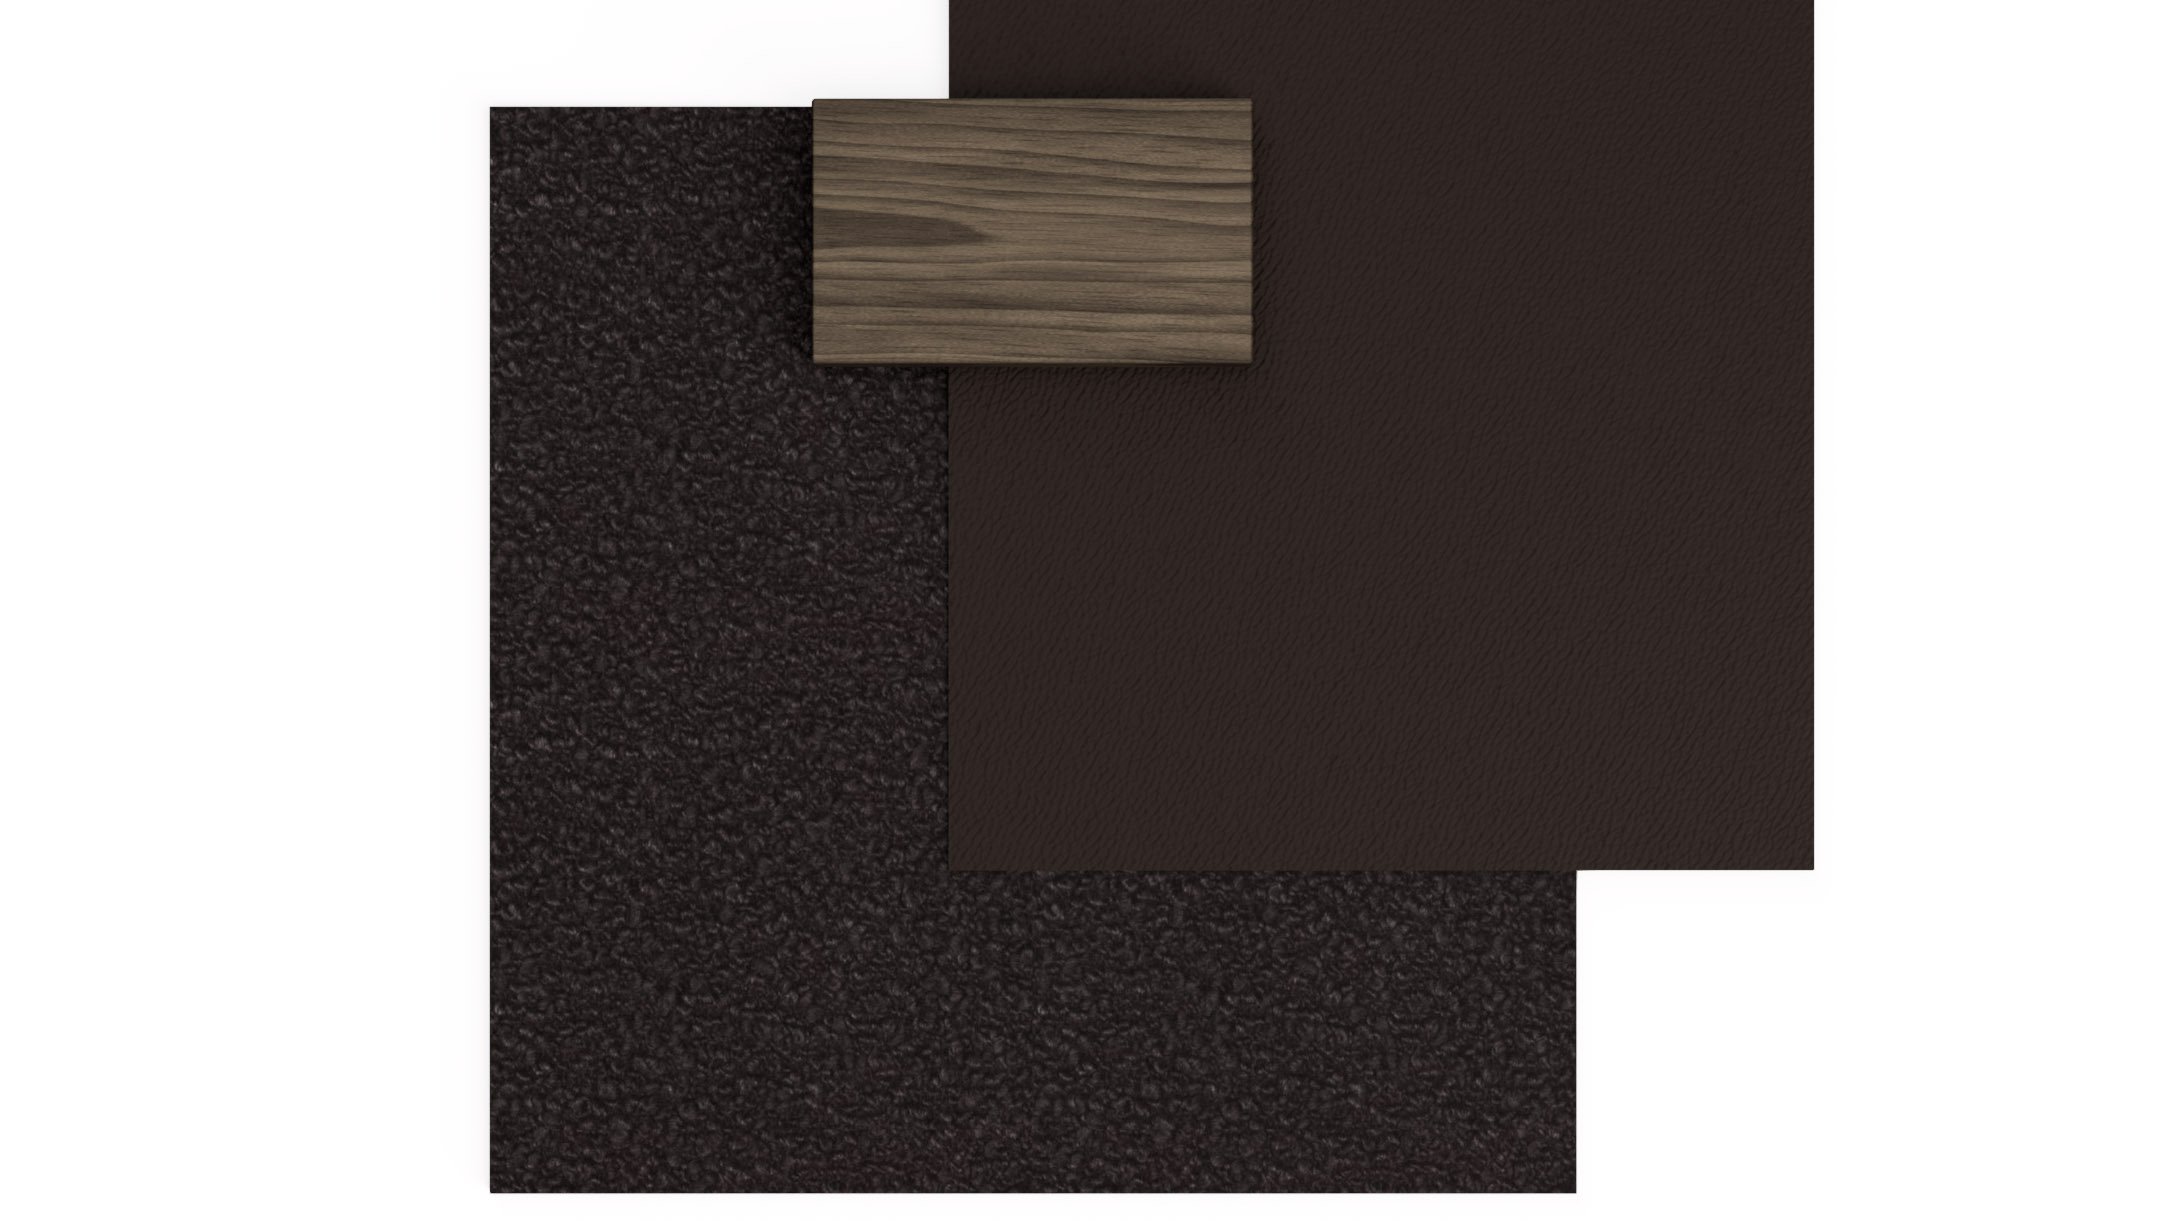  SAHCO Elle 390 fabric   Linea 610 leather   Walnut 